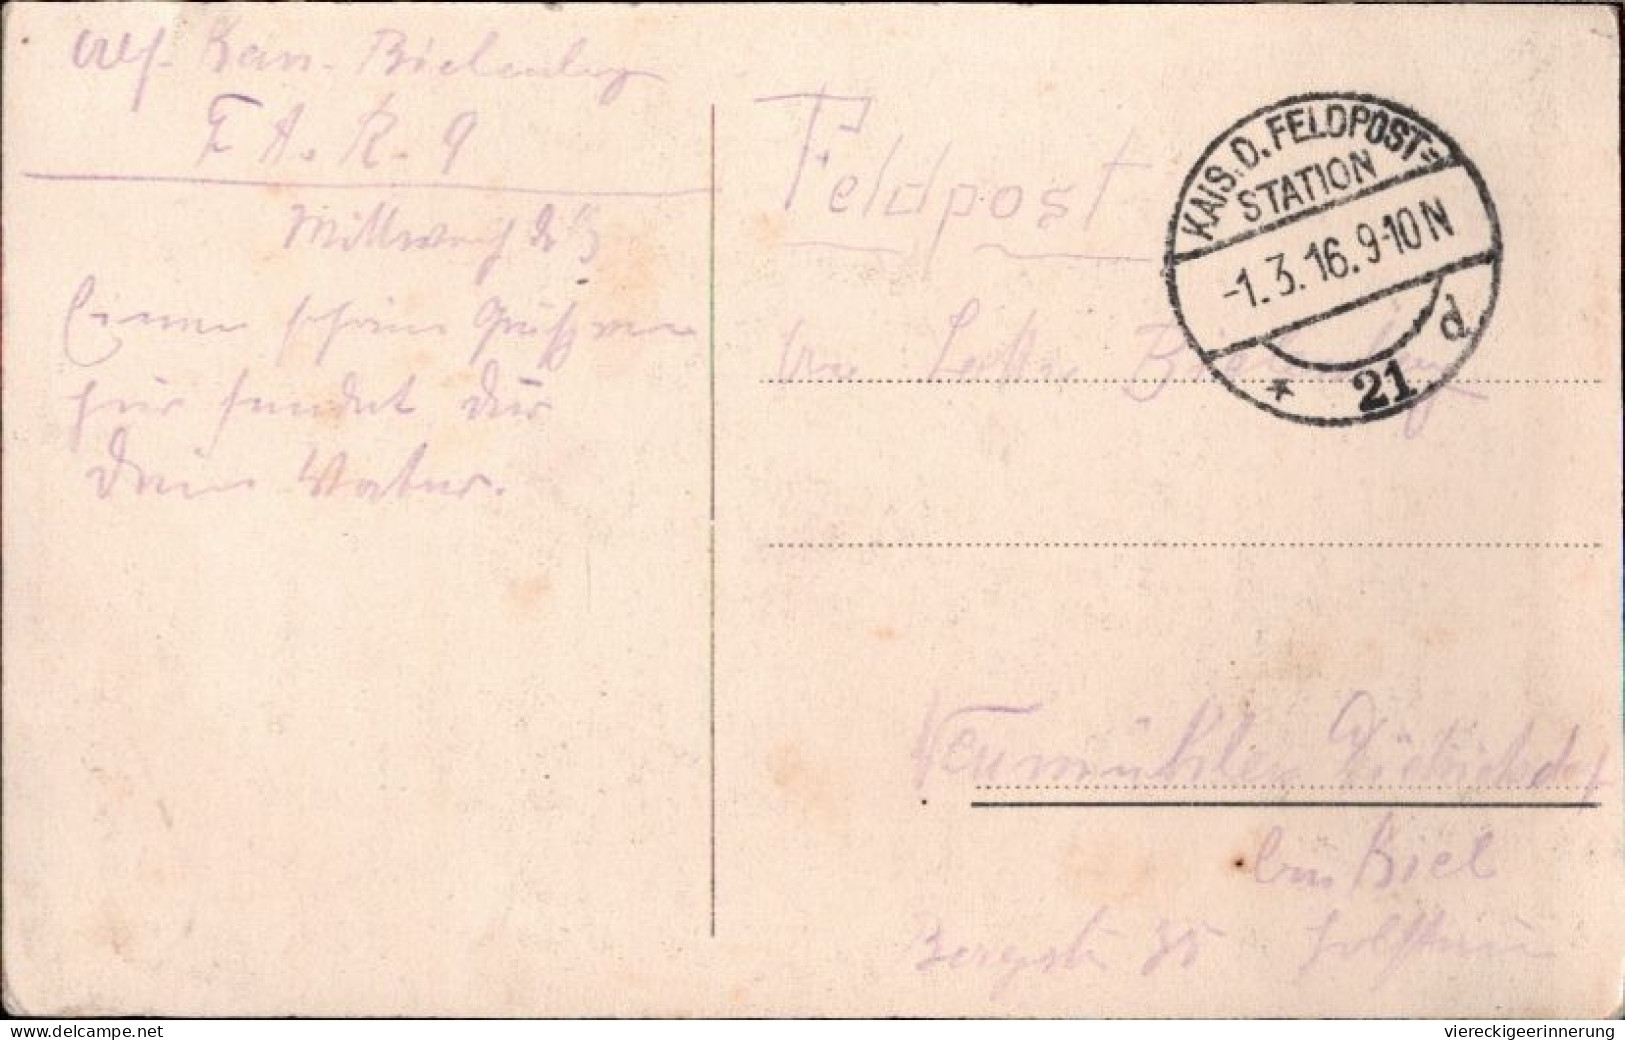 ! 1916 Cpa Chauny, Königstraße, 1. Weltkrieg Feldpost - Chauny